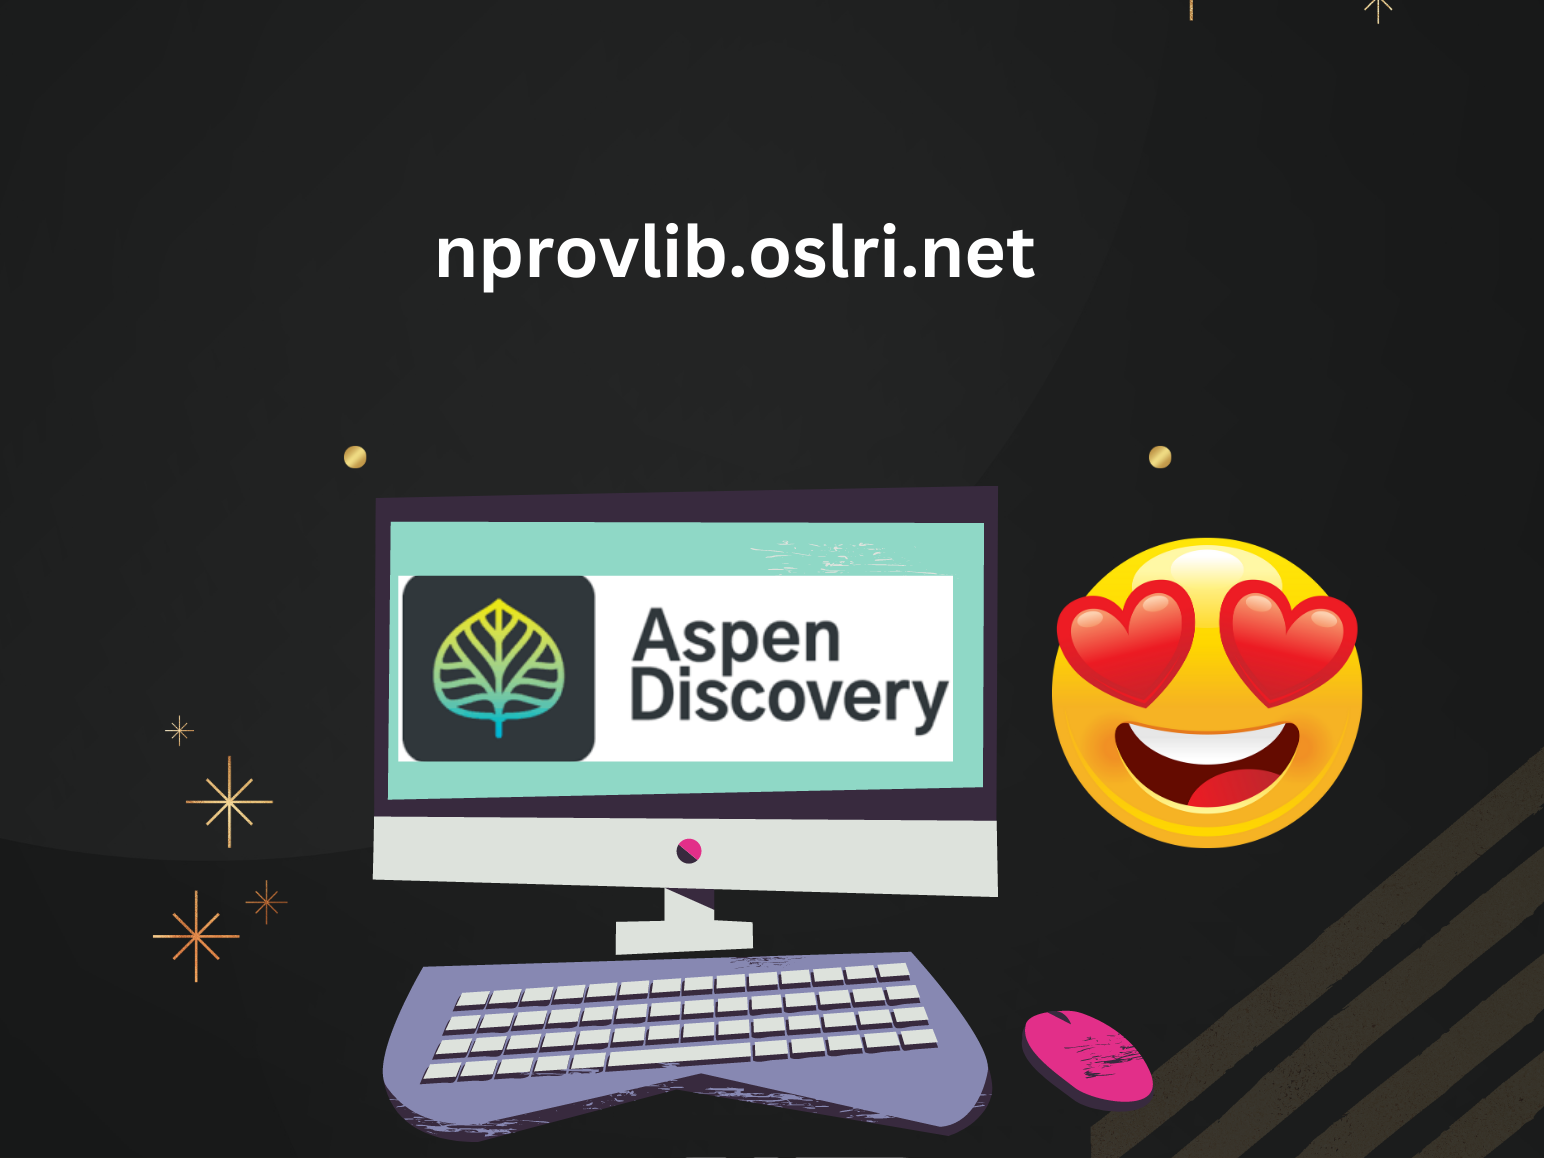 Computer image with "Aspen Discovery" on the screen.  https://nprovlib.oslri.net/